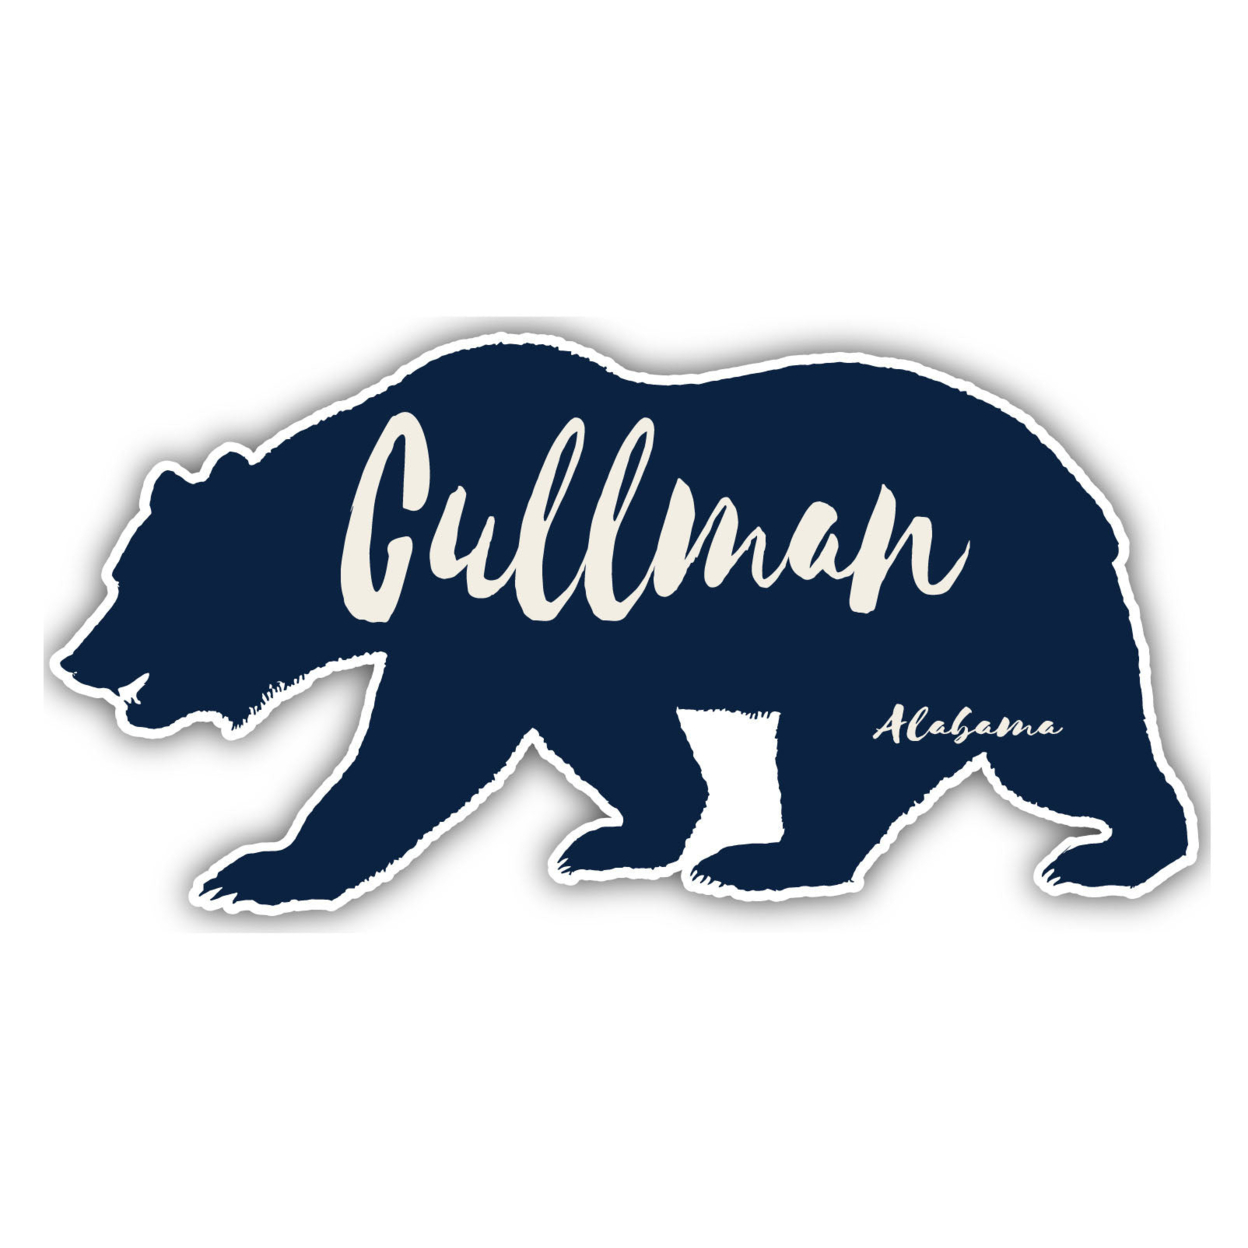 Cullman Alabama Souvenir Decorative Stickers (Choose Theme And Size) - 4-Pack, 4-Inch, Bear